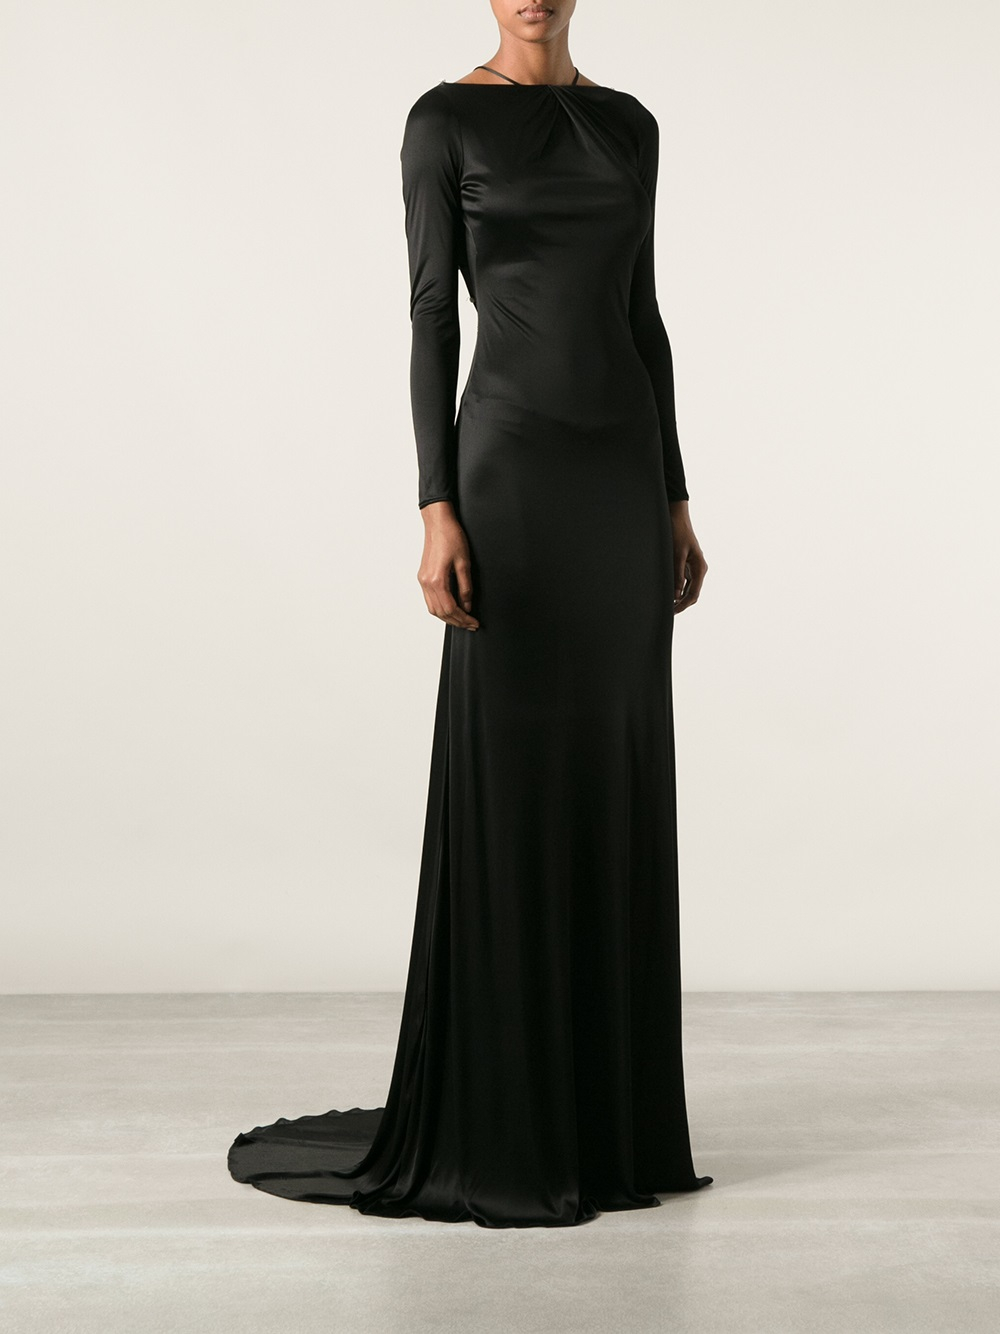 Roberto cavalli Snake Back Evening Dress in Black | Lyst